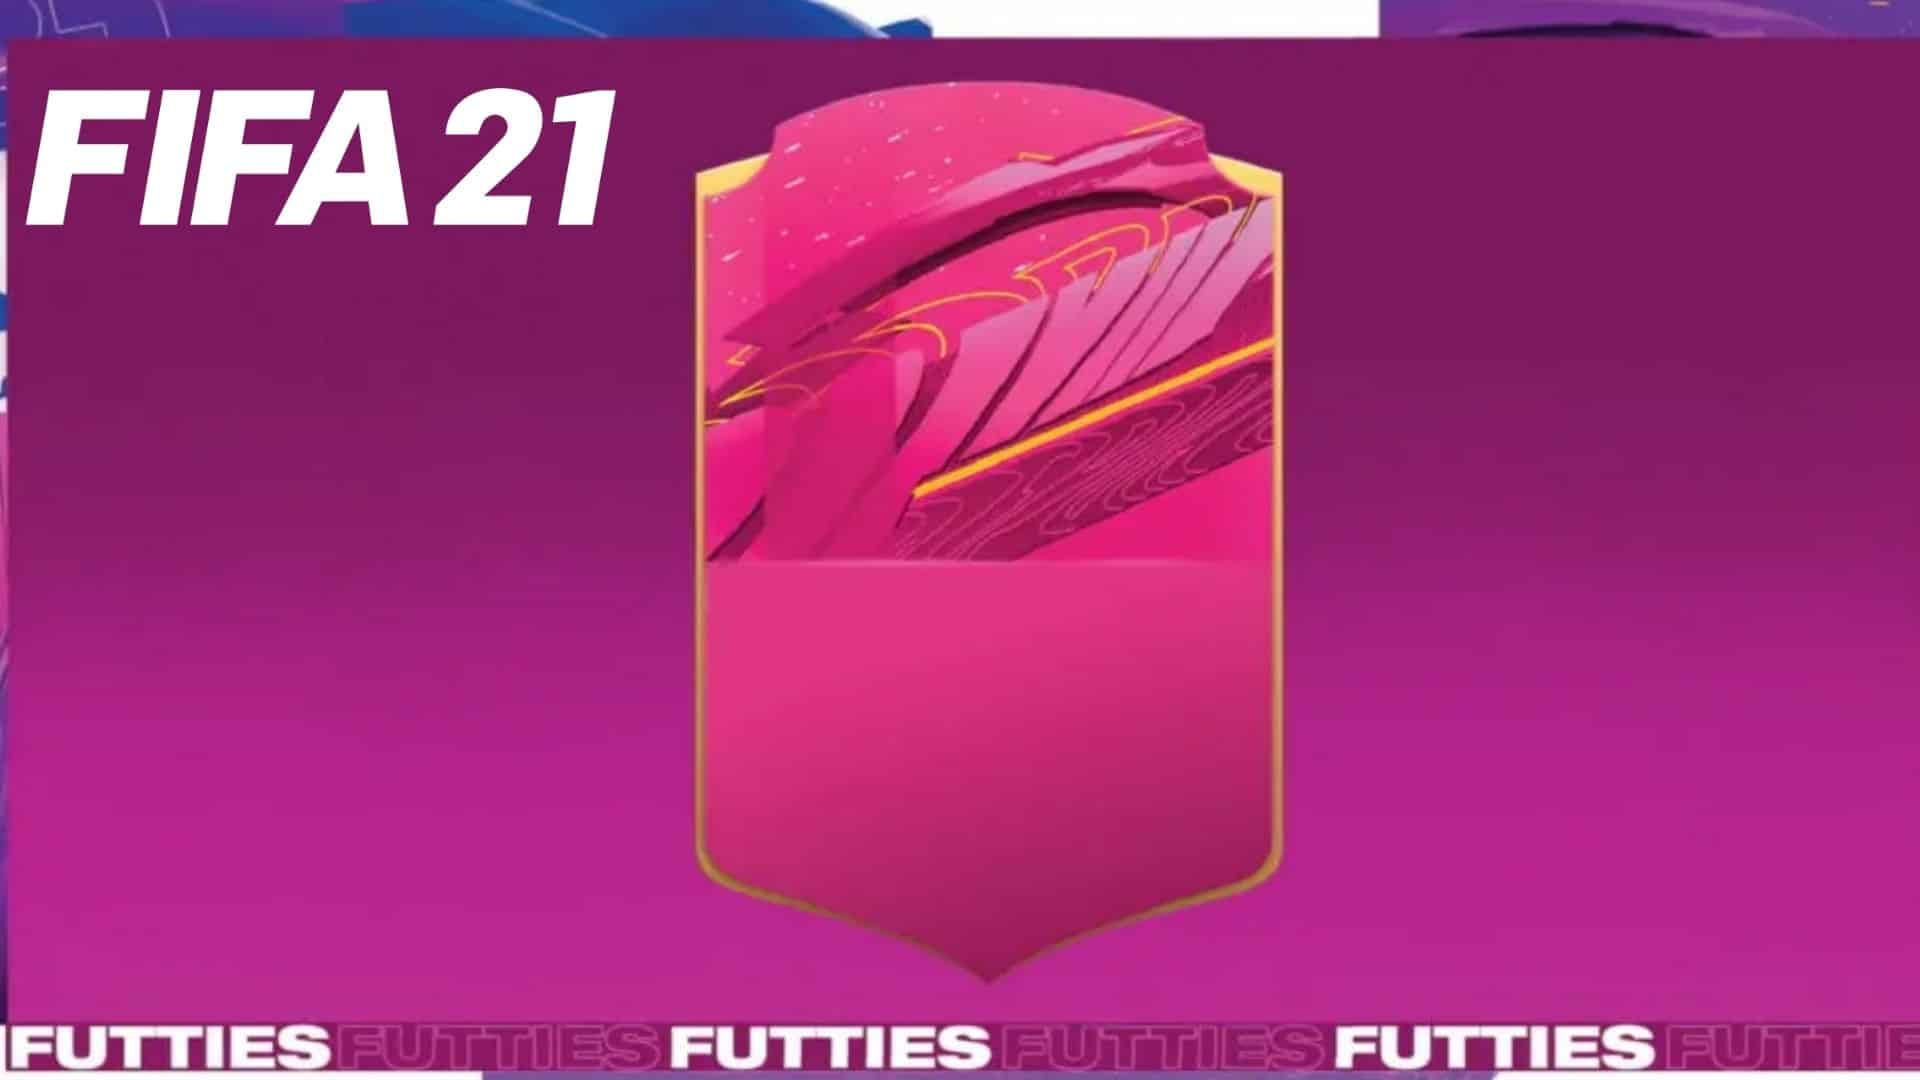 FIFA 21 FUTTIES cards